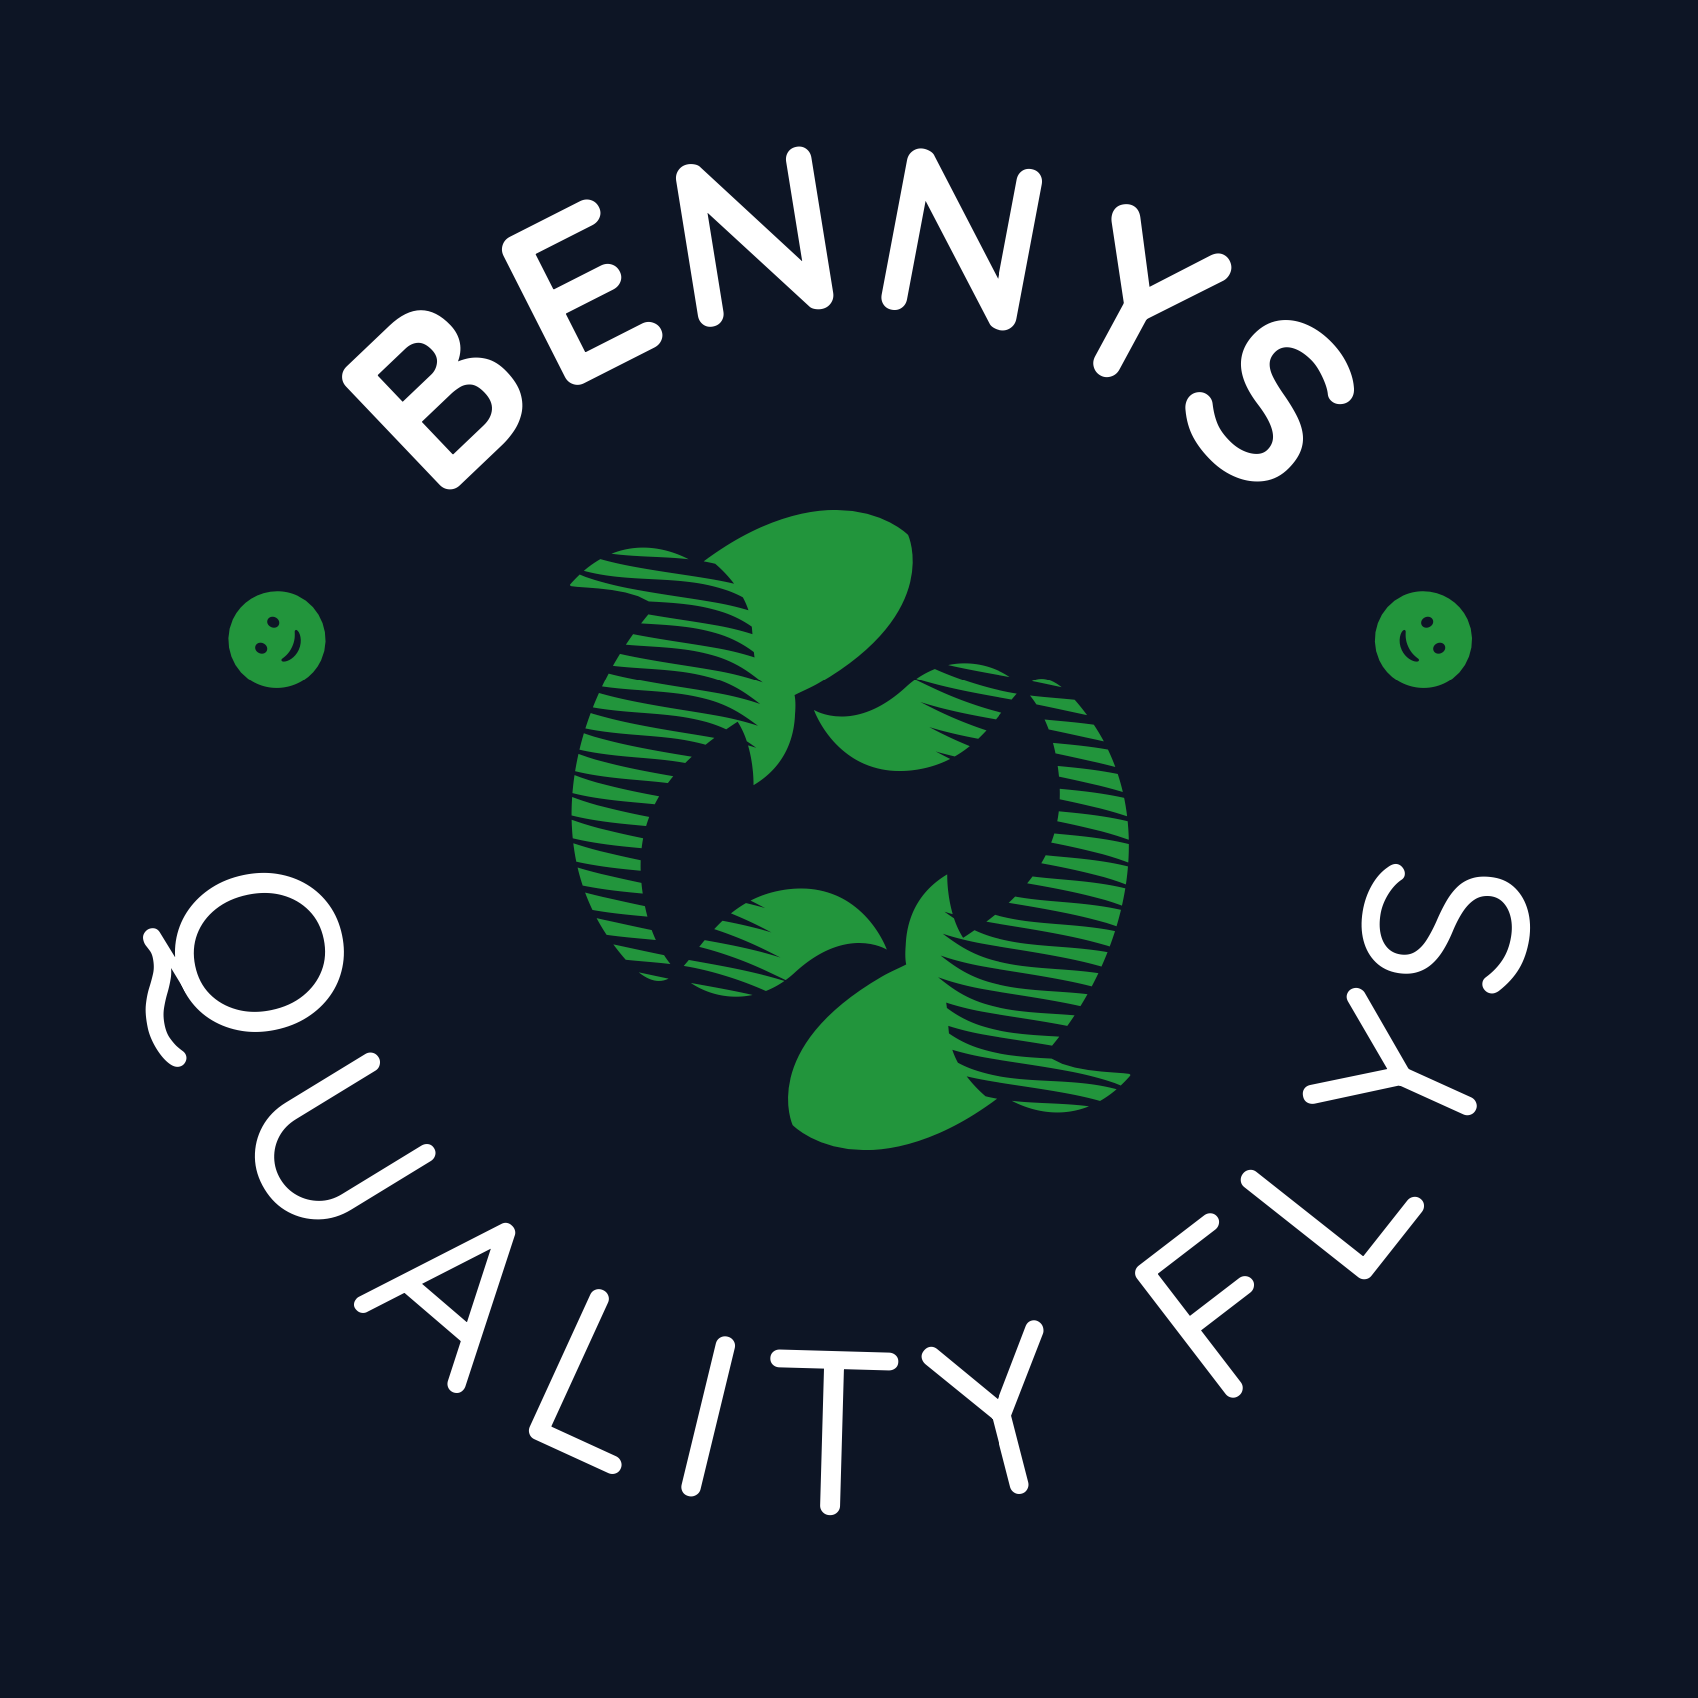 Benny's Quality Flys